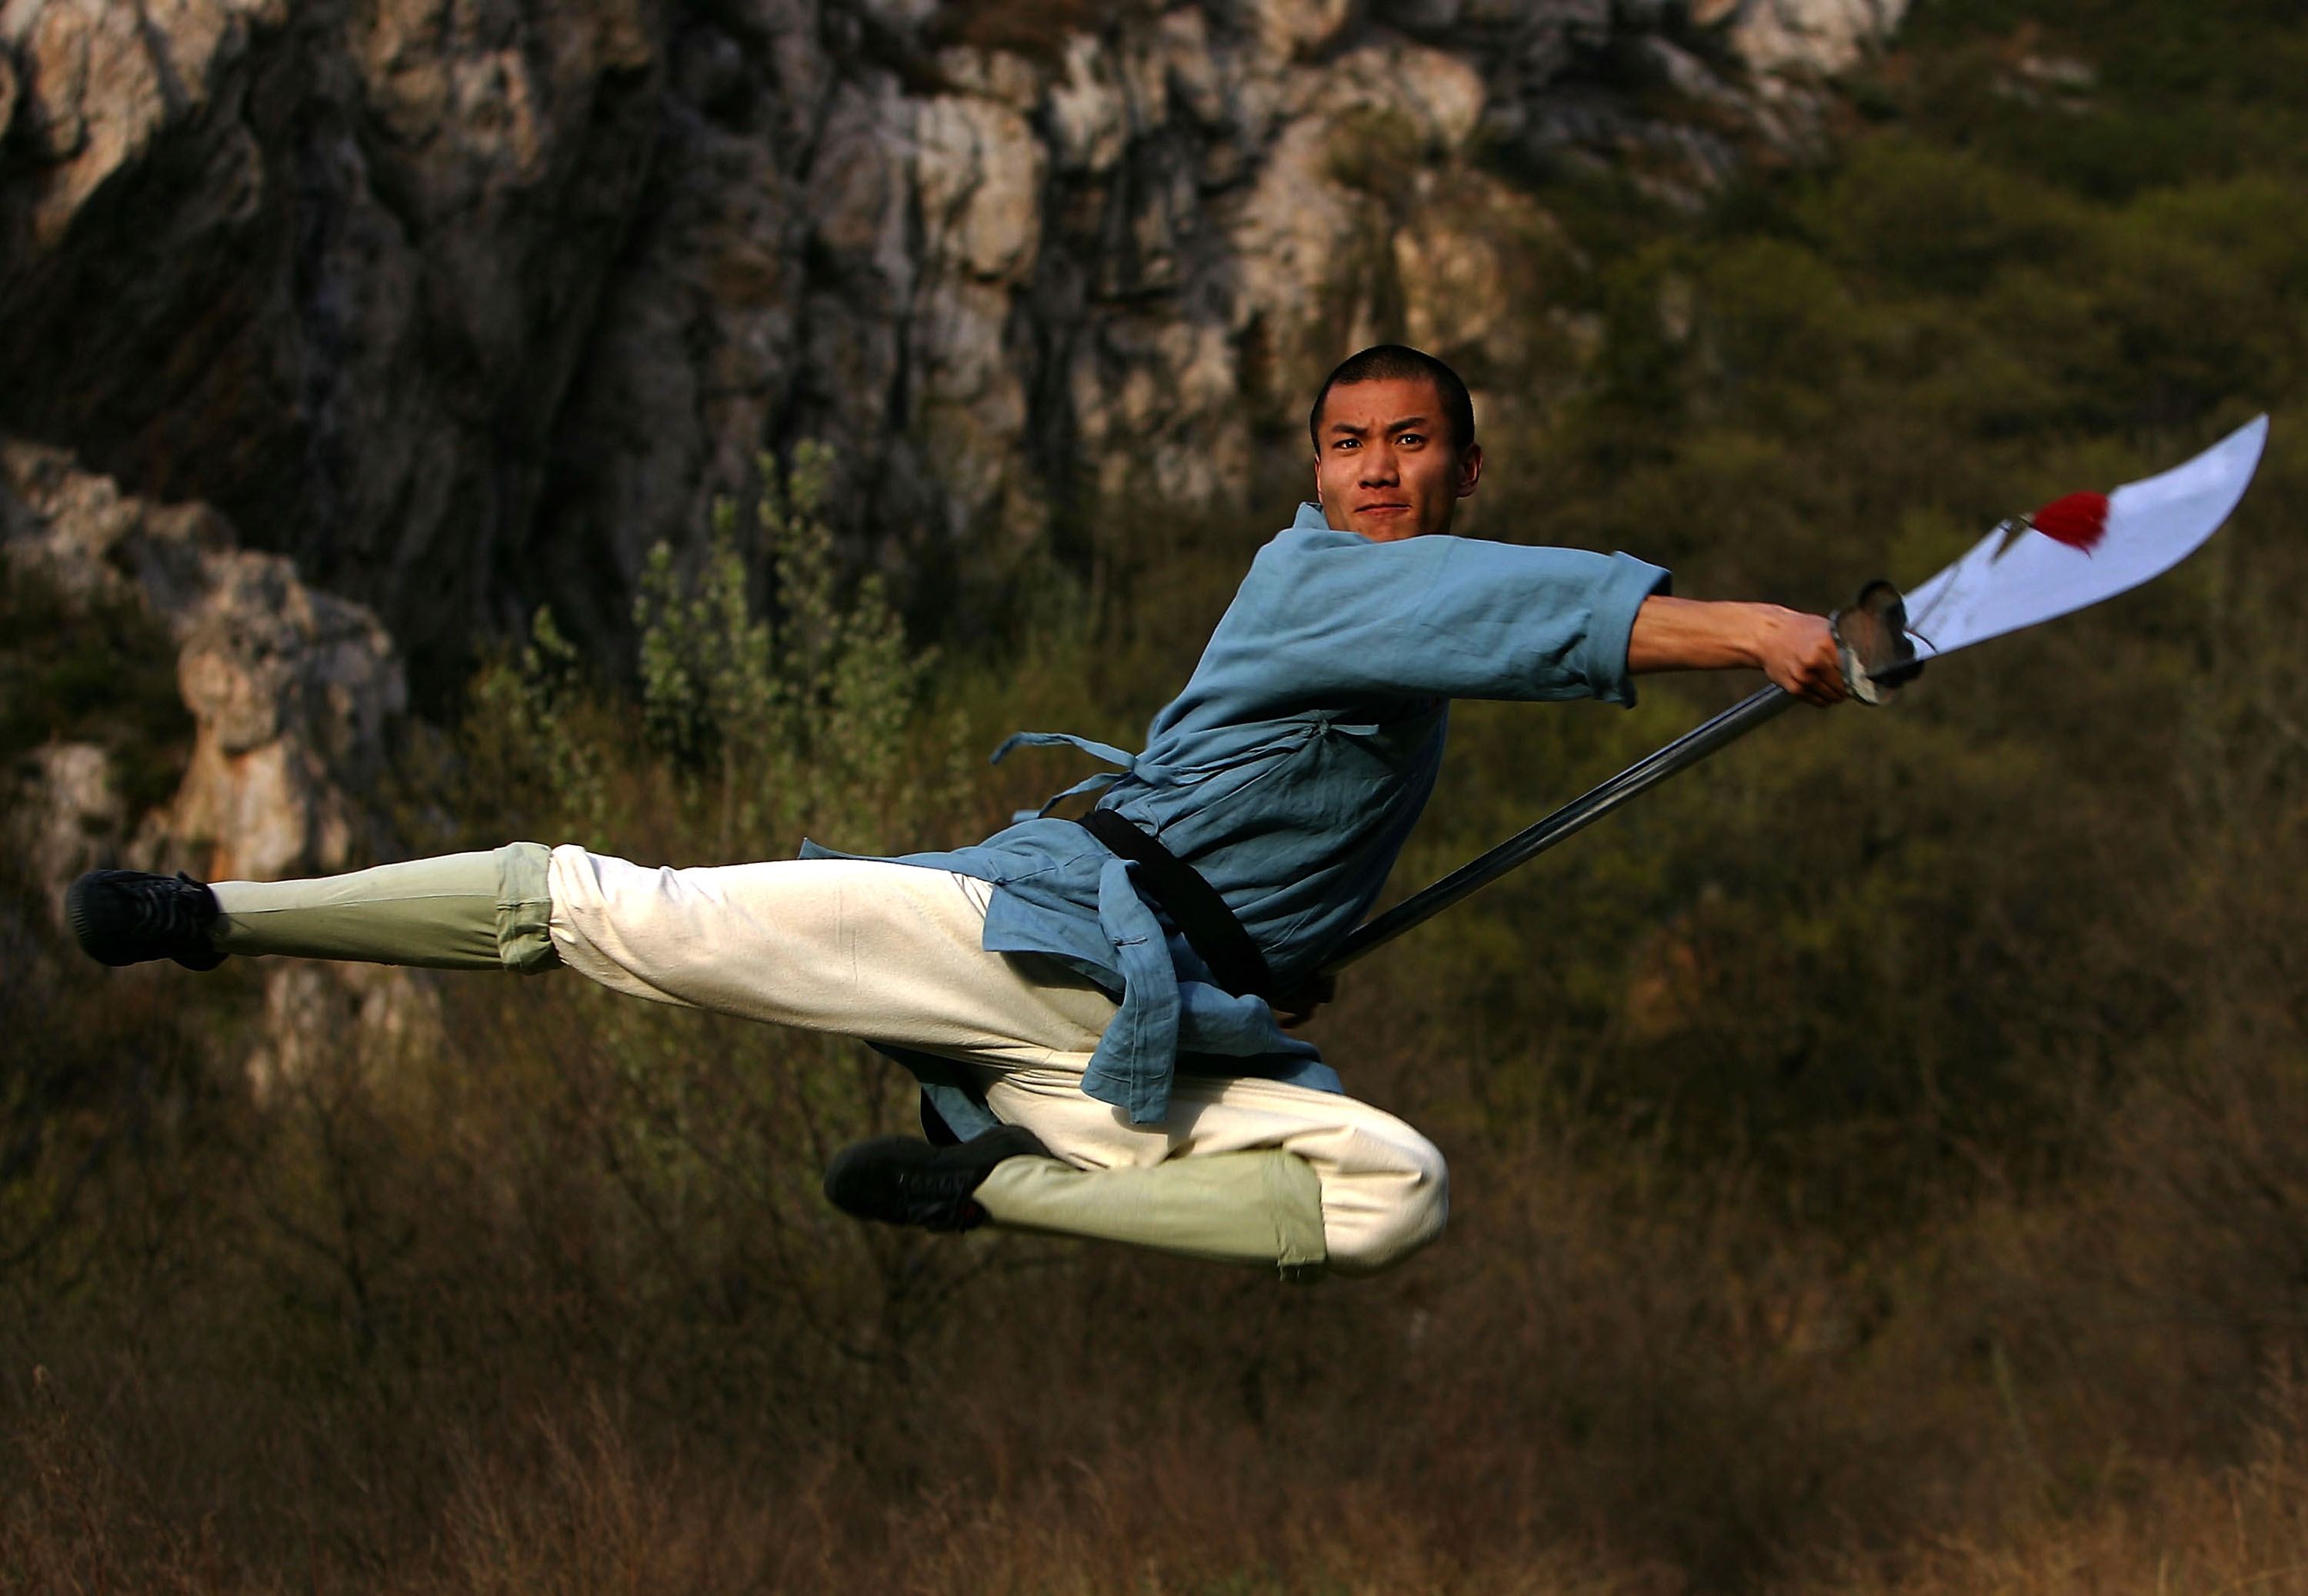 fond d'écran shaolin kung fu,sport extrême,aventure,des sports,sauter